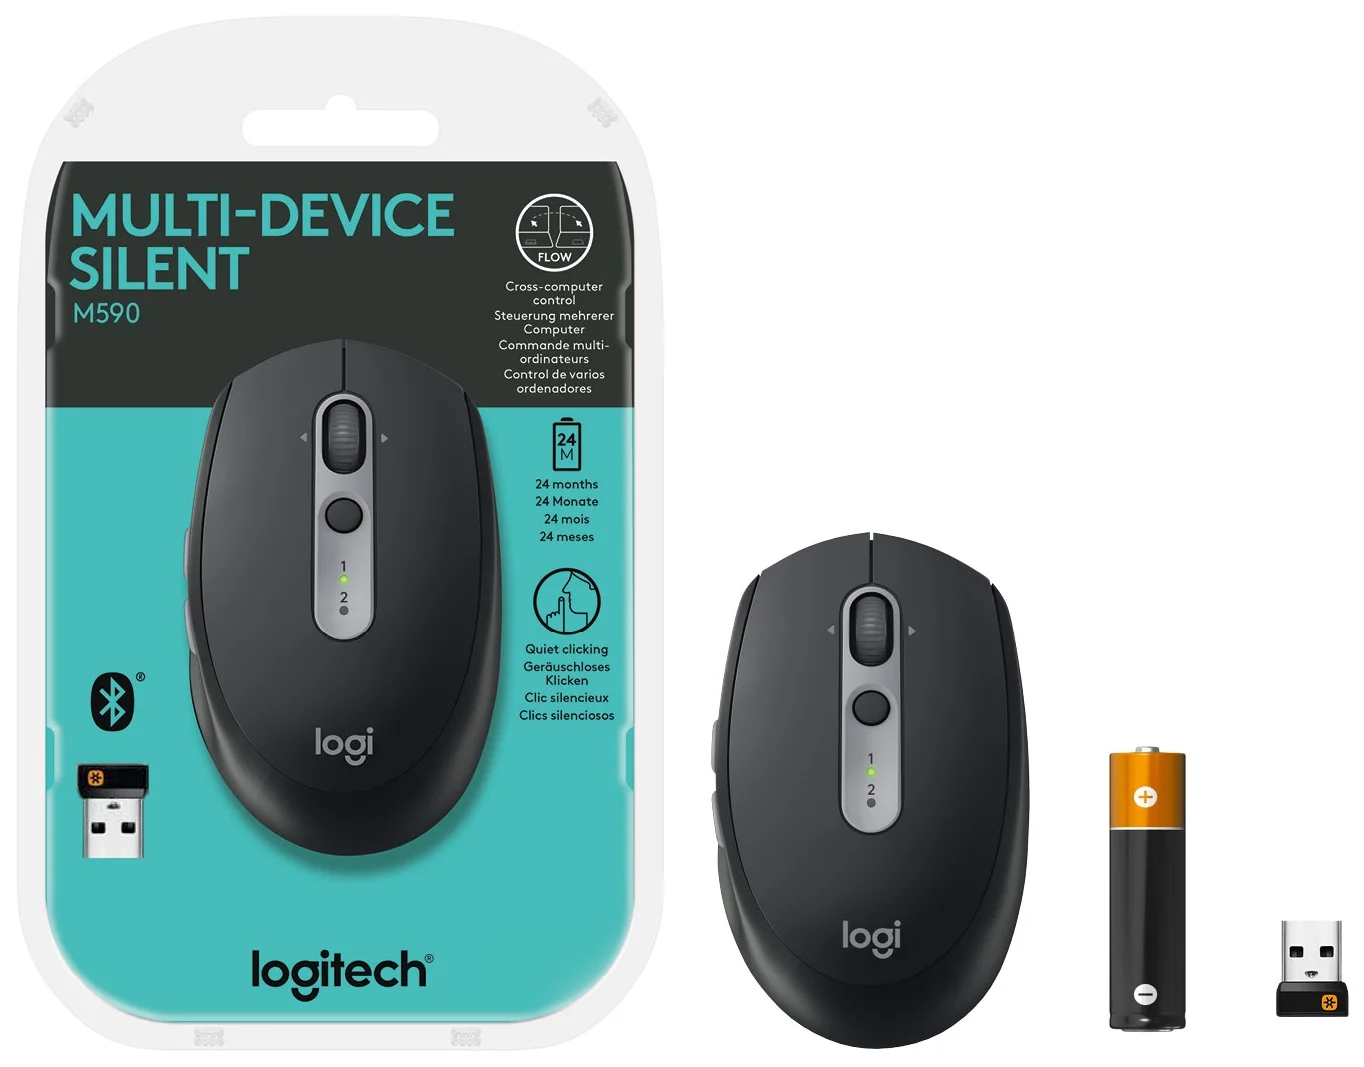 Logitech M590 Multi-Device Silent - дизайн: для правой руки